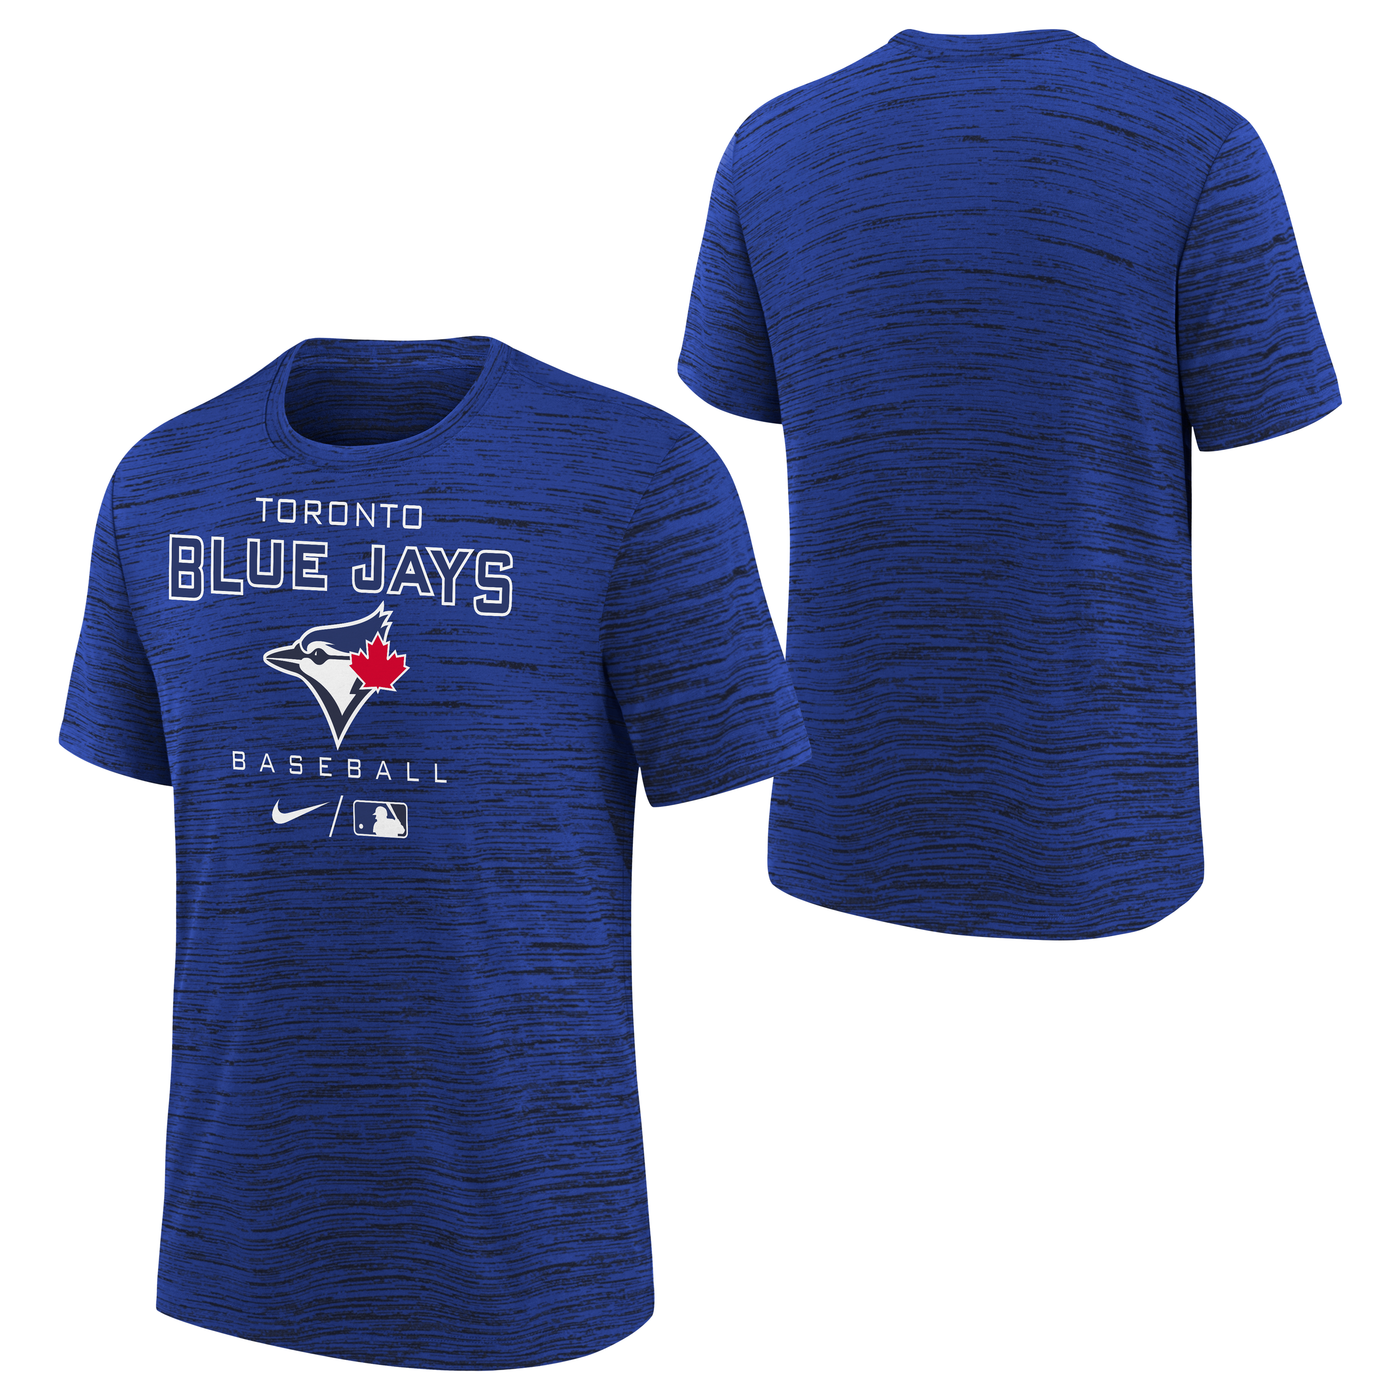 Nike Rewind Colors (MLB Boston Red Sox) Men's 3/4-Sleeve T-Shirt.